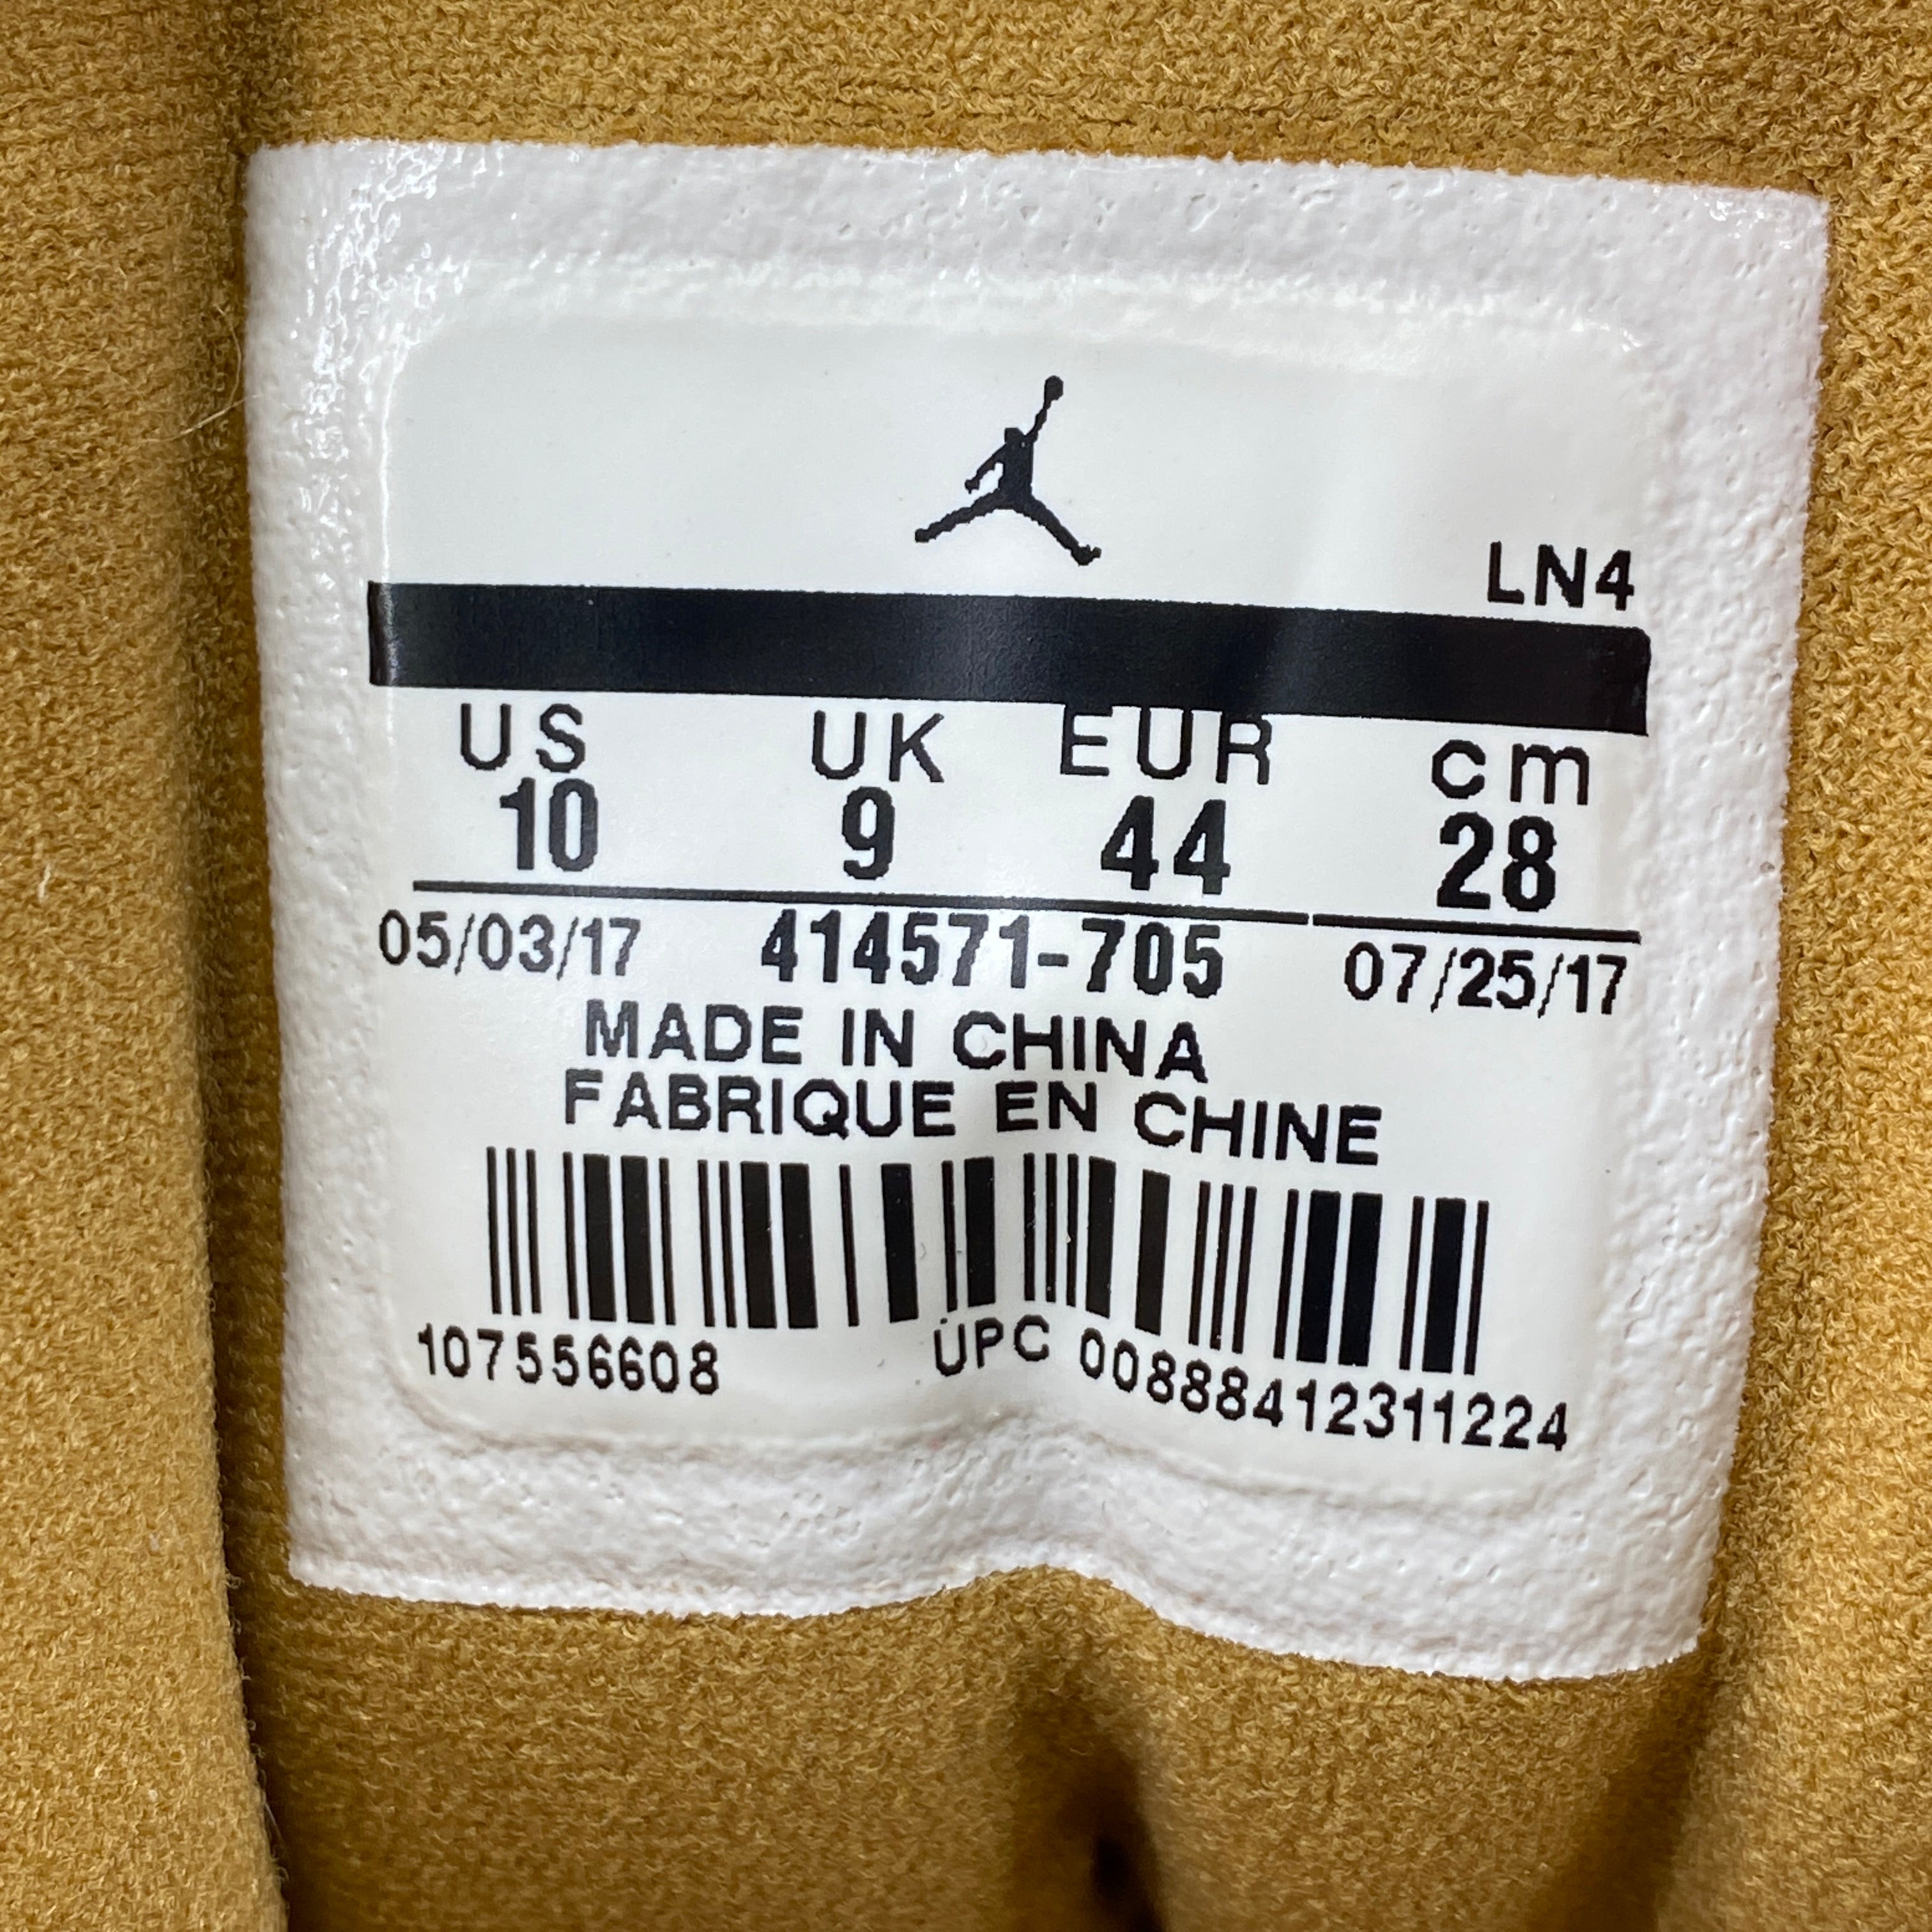 Air Jordan 13 Retro "Wheat" 2017 Used Size 10